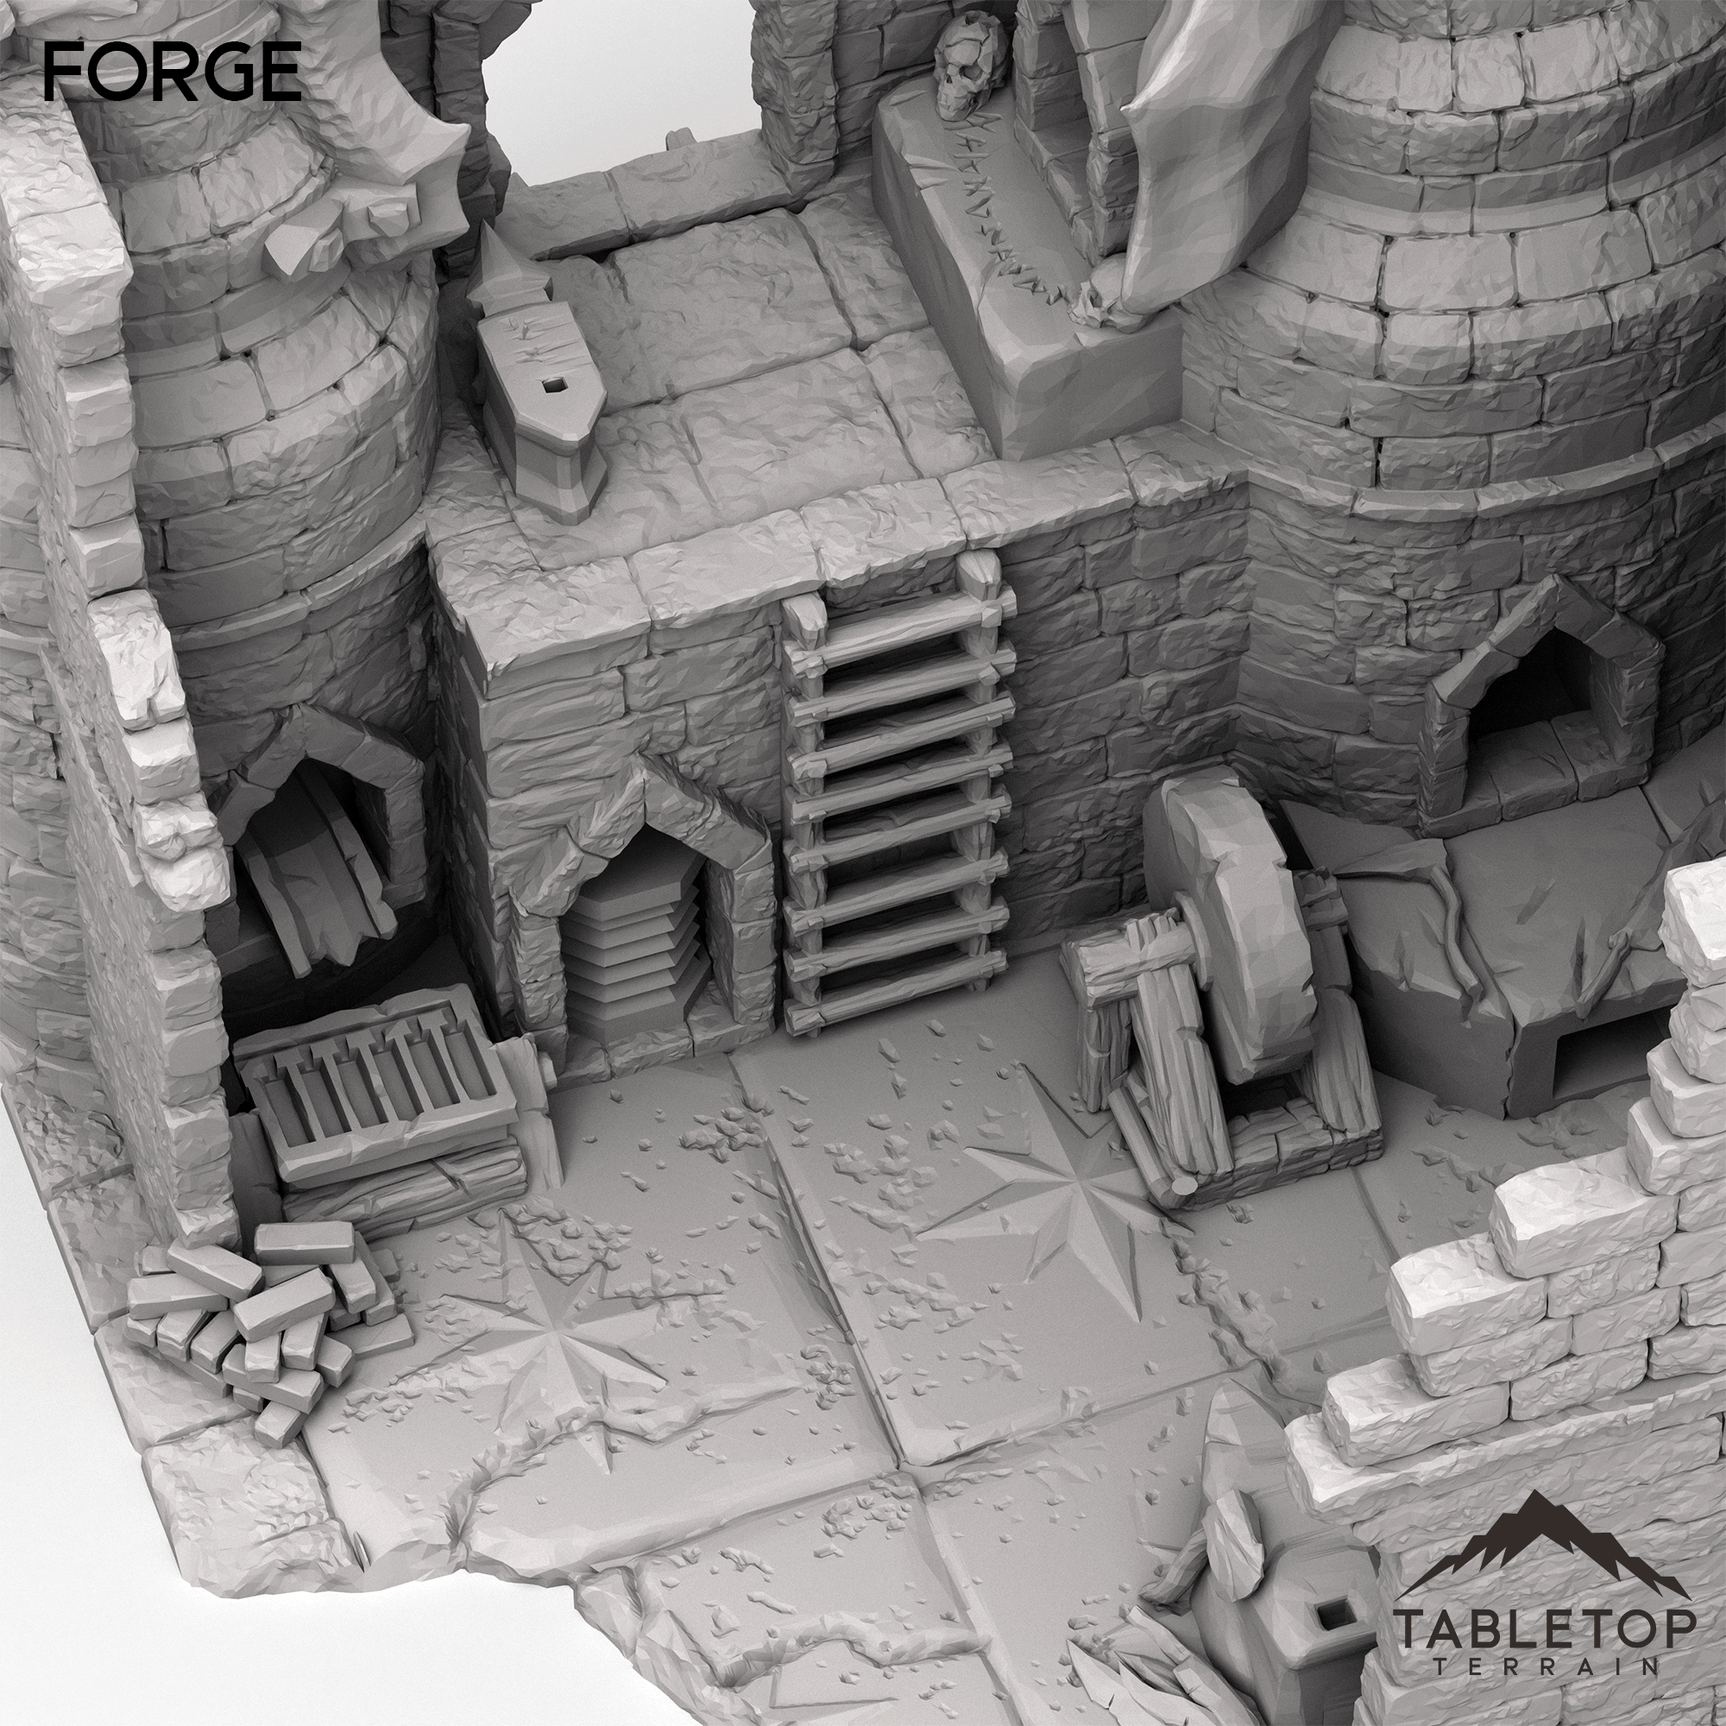 Forge - Kingdom of Azragor